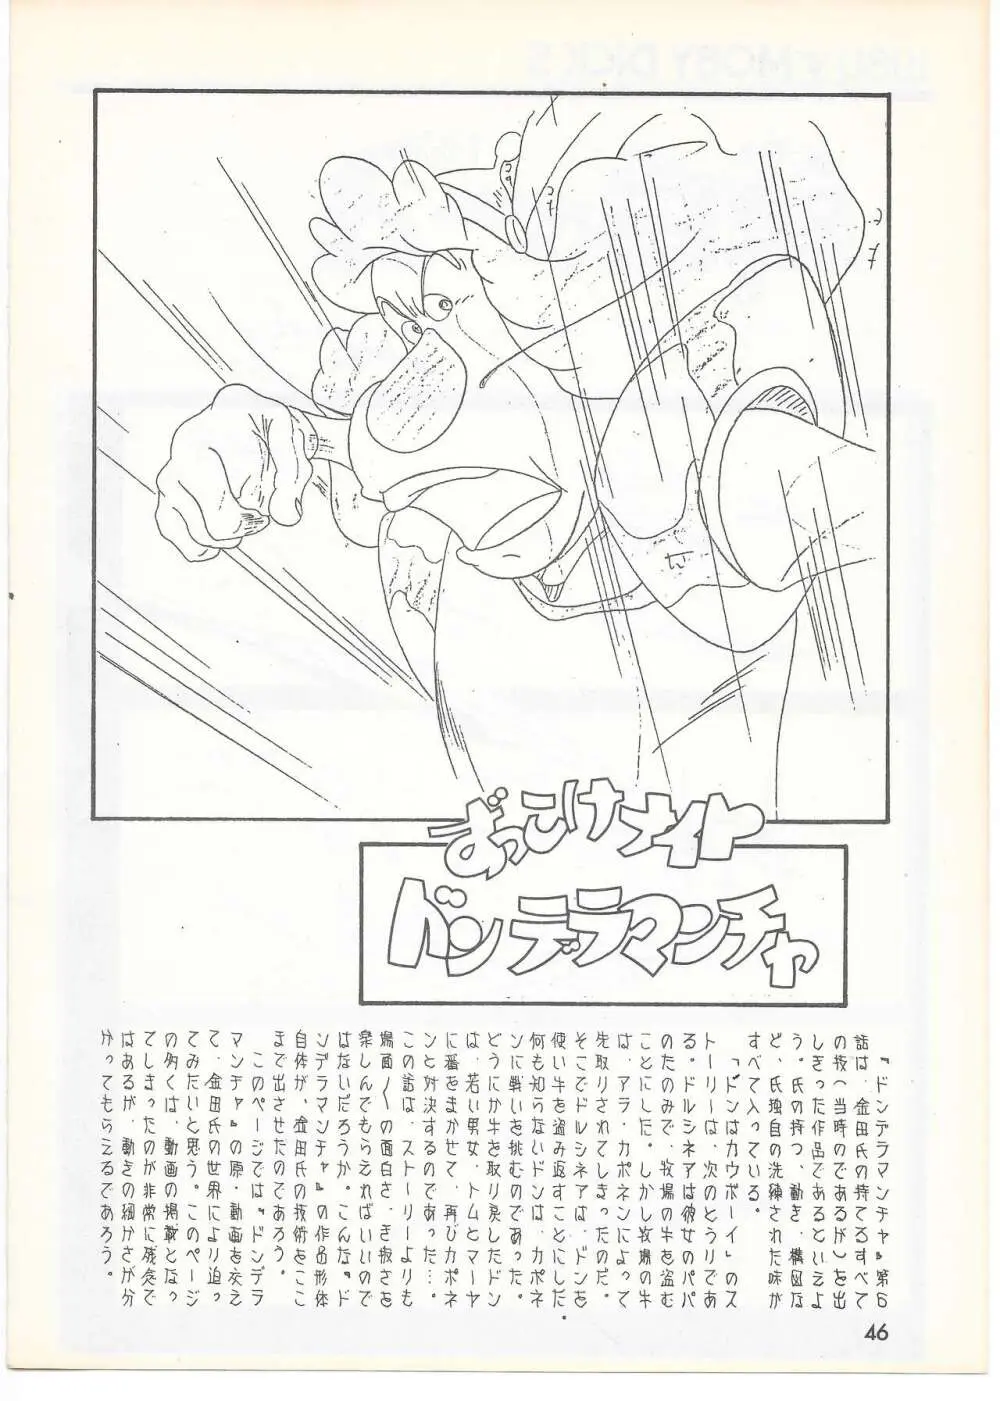 THE ANIMATOR 1 金田伊功特集号 - page45